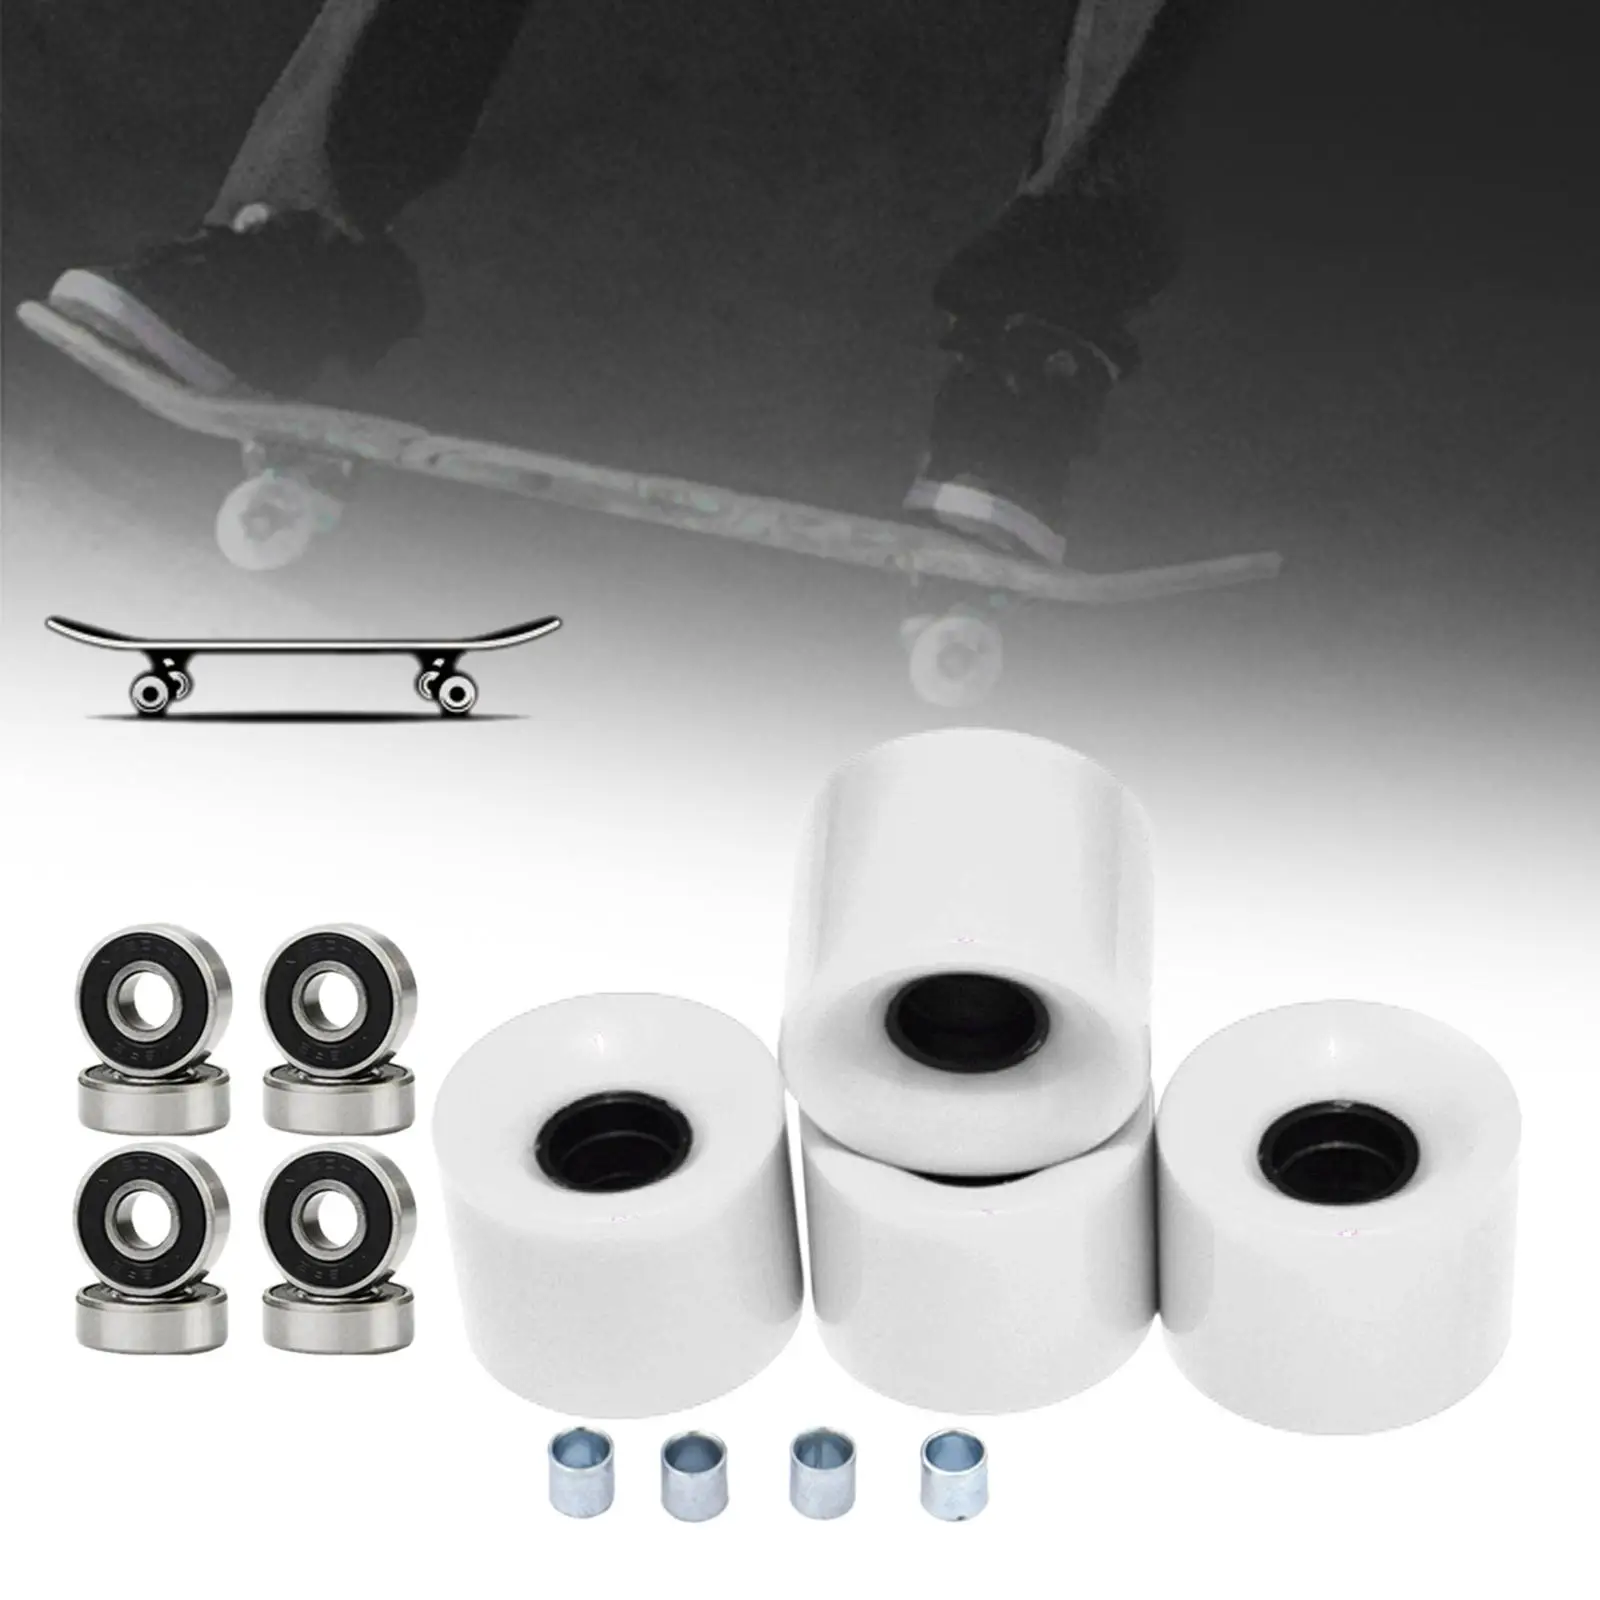 4 Pcs Skateboard Wheels And Bearings Spacers Set, Cruiser Wheels PU, Skateboard Parts Accessory 60x45mm